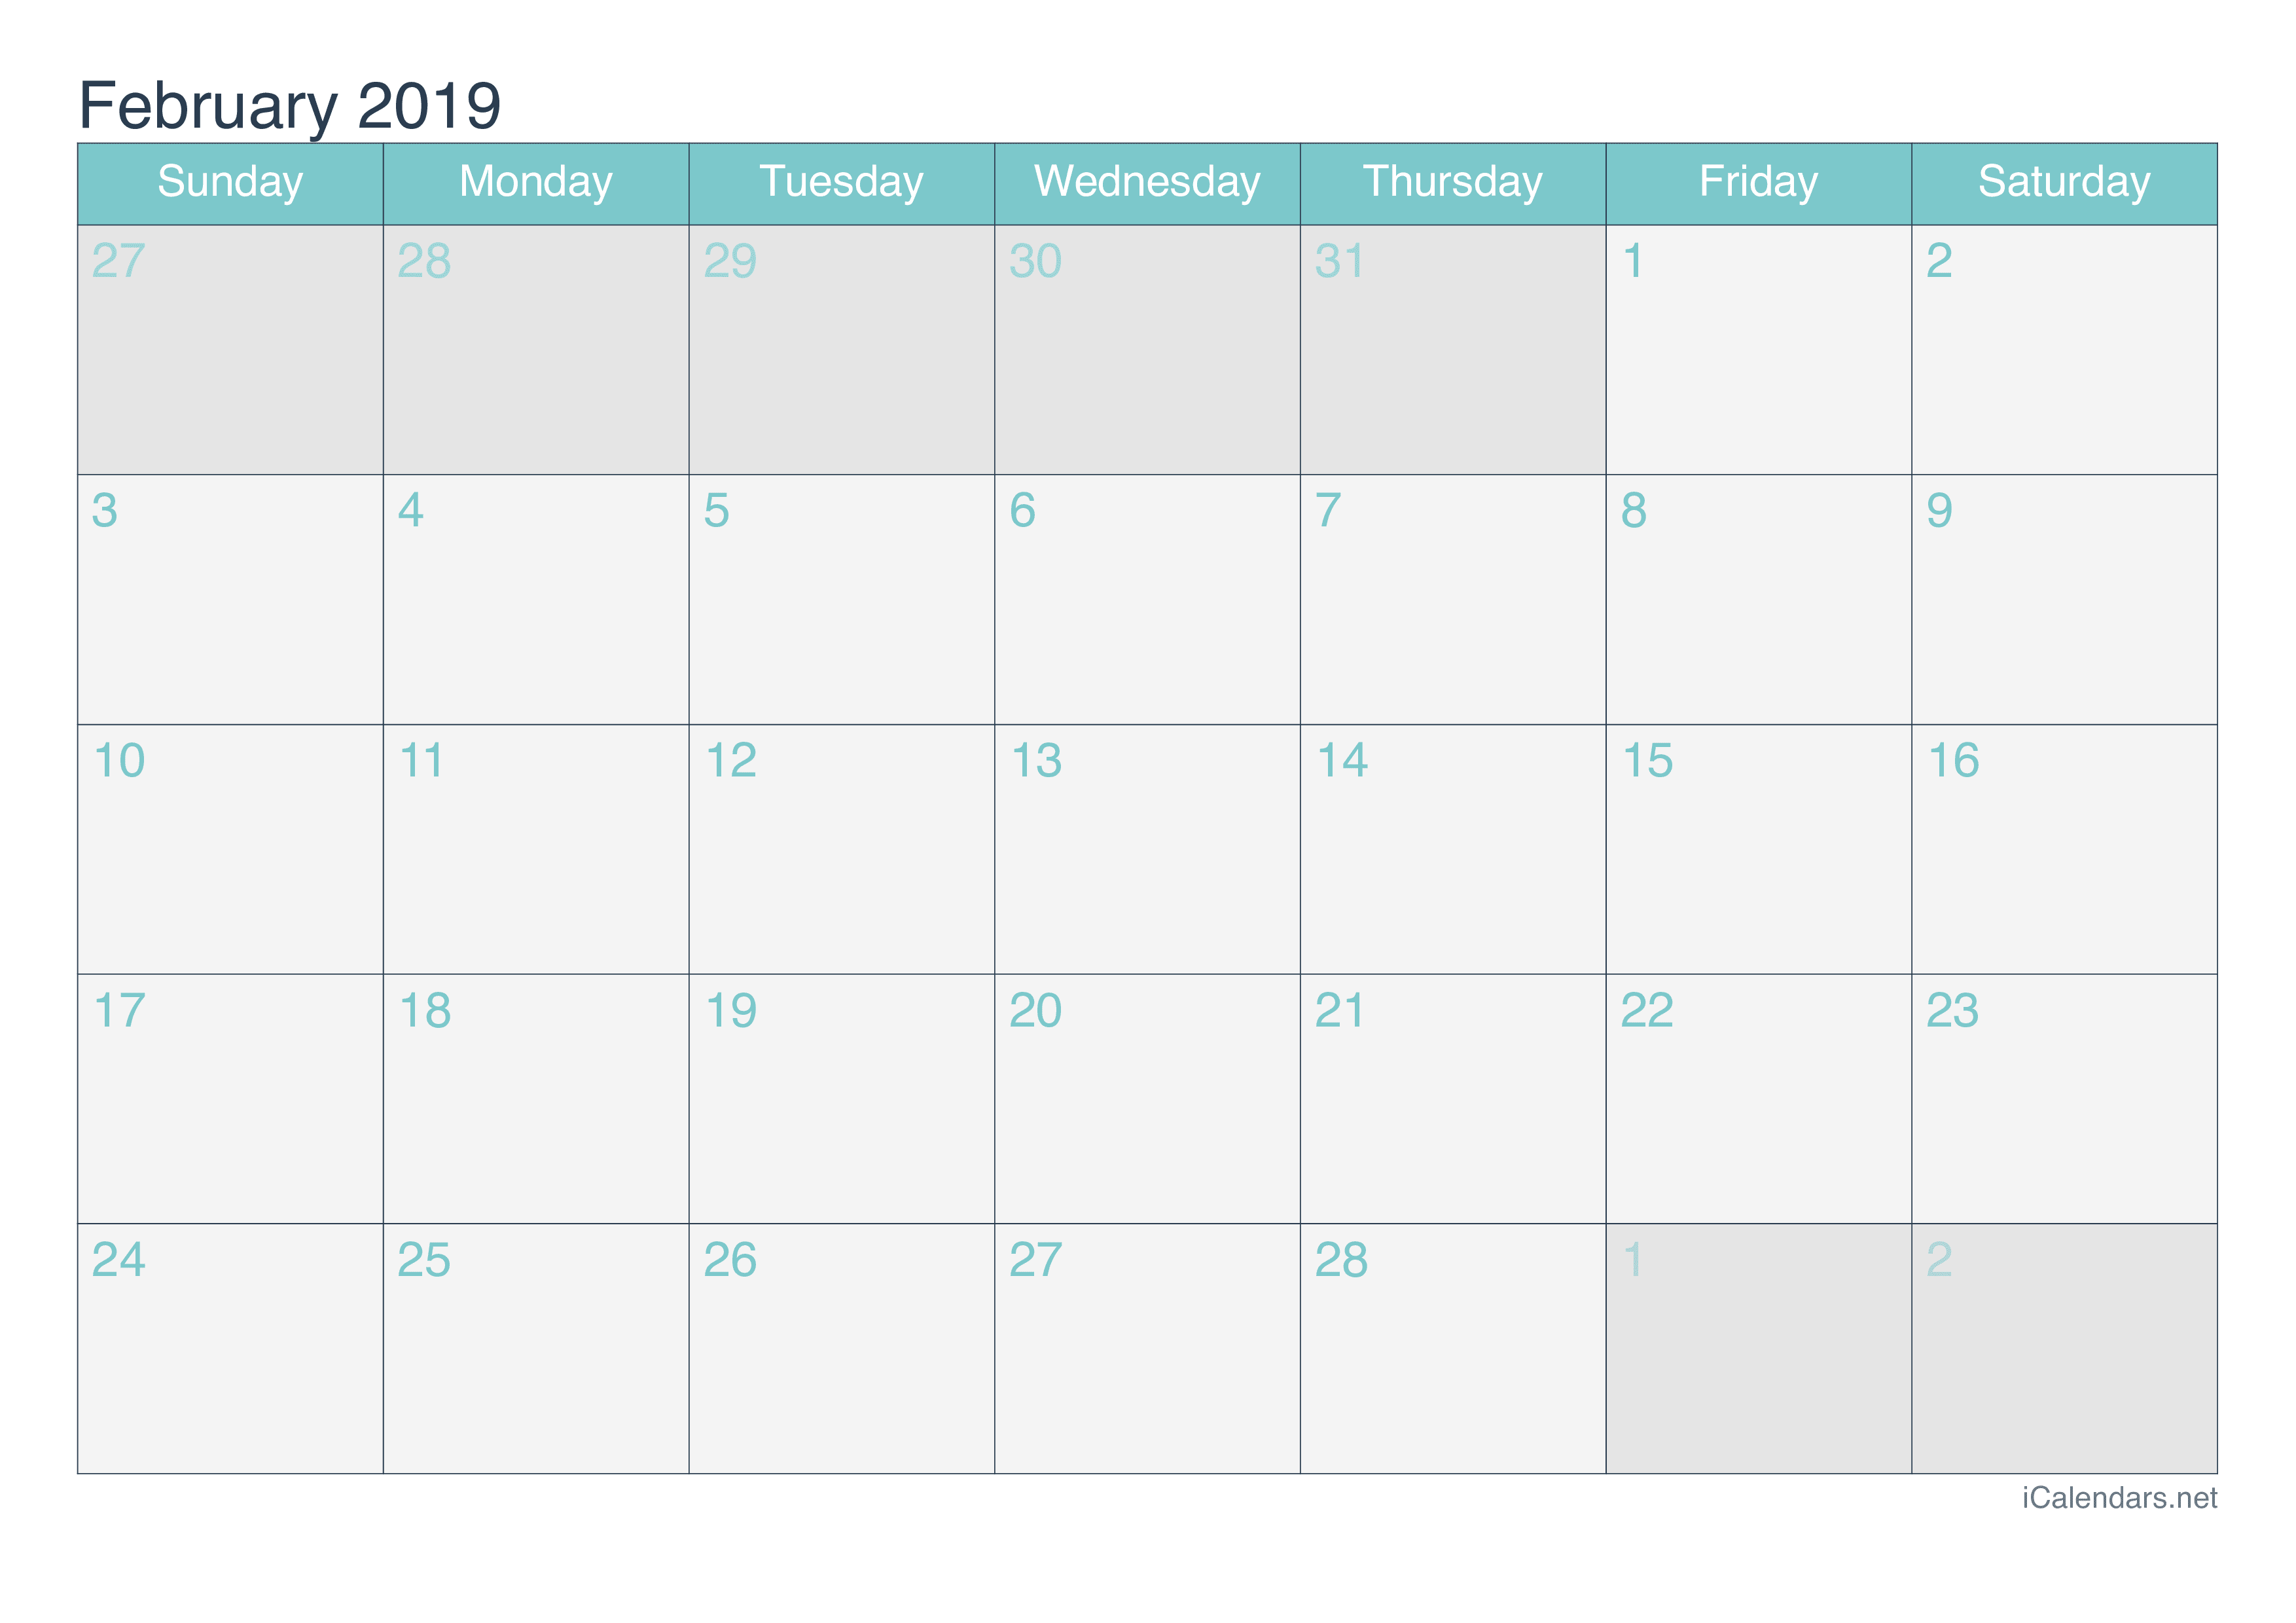 February 2019 Printable Calendar icalendars net